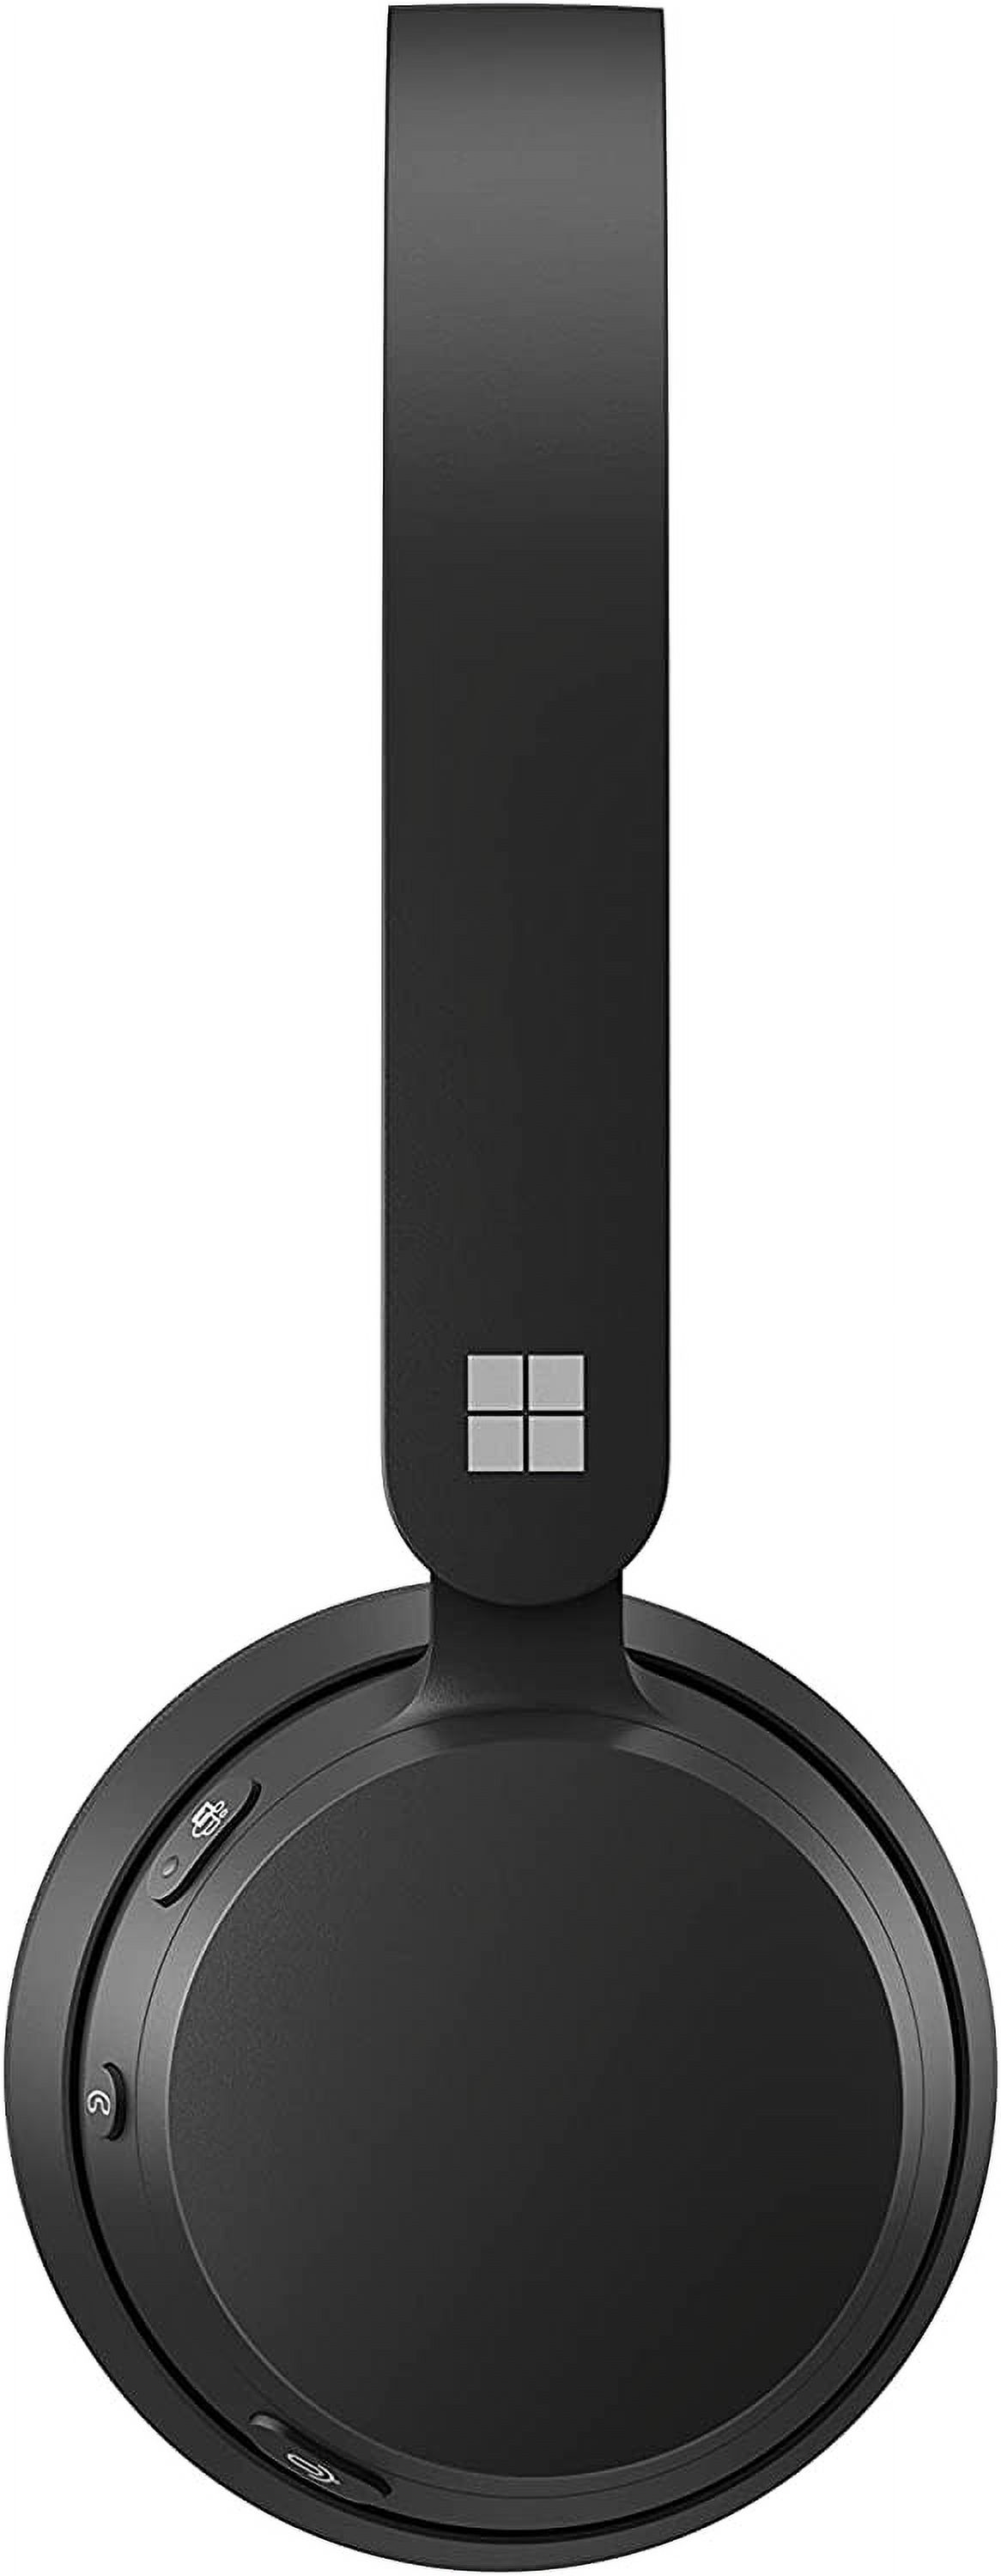 Microsoft Modern Wireless Headset, Black - image 4 of 4